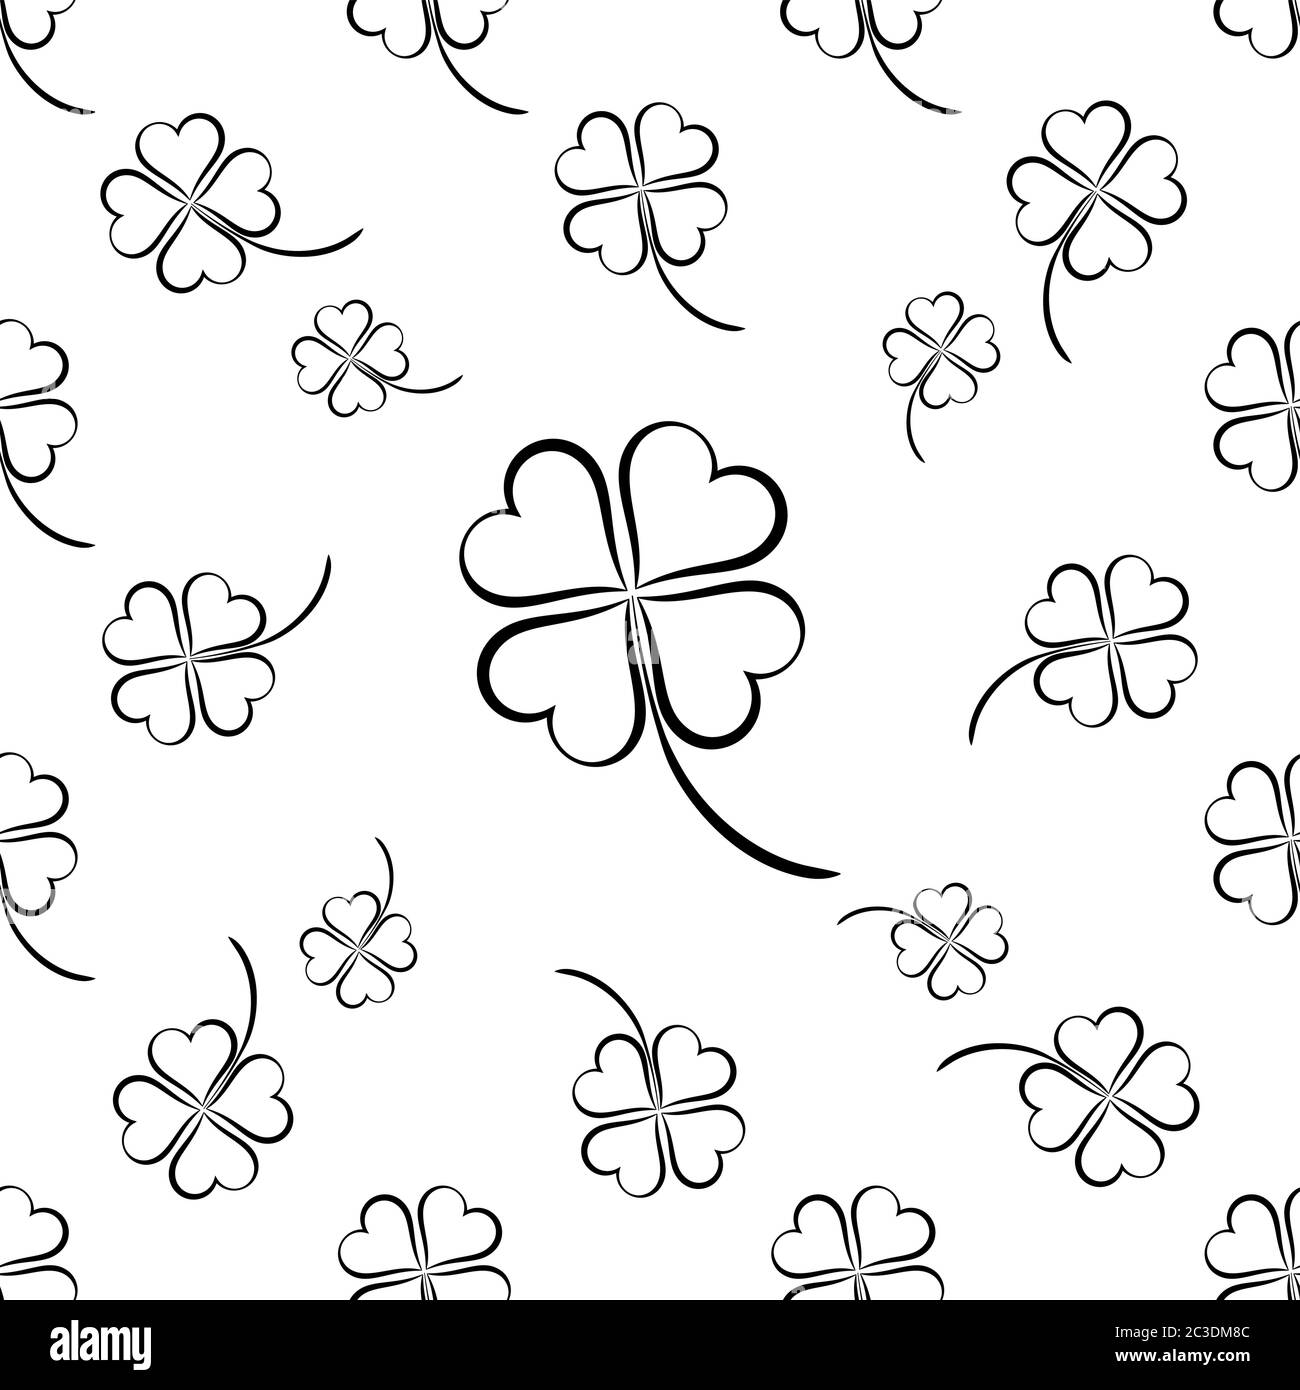 Clover Four Leaf Shamrock Seamless Pattern Vector Art Illustration Stock Vector